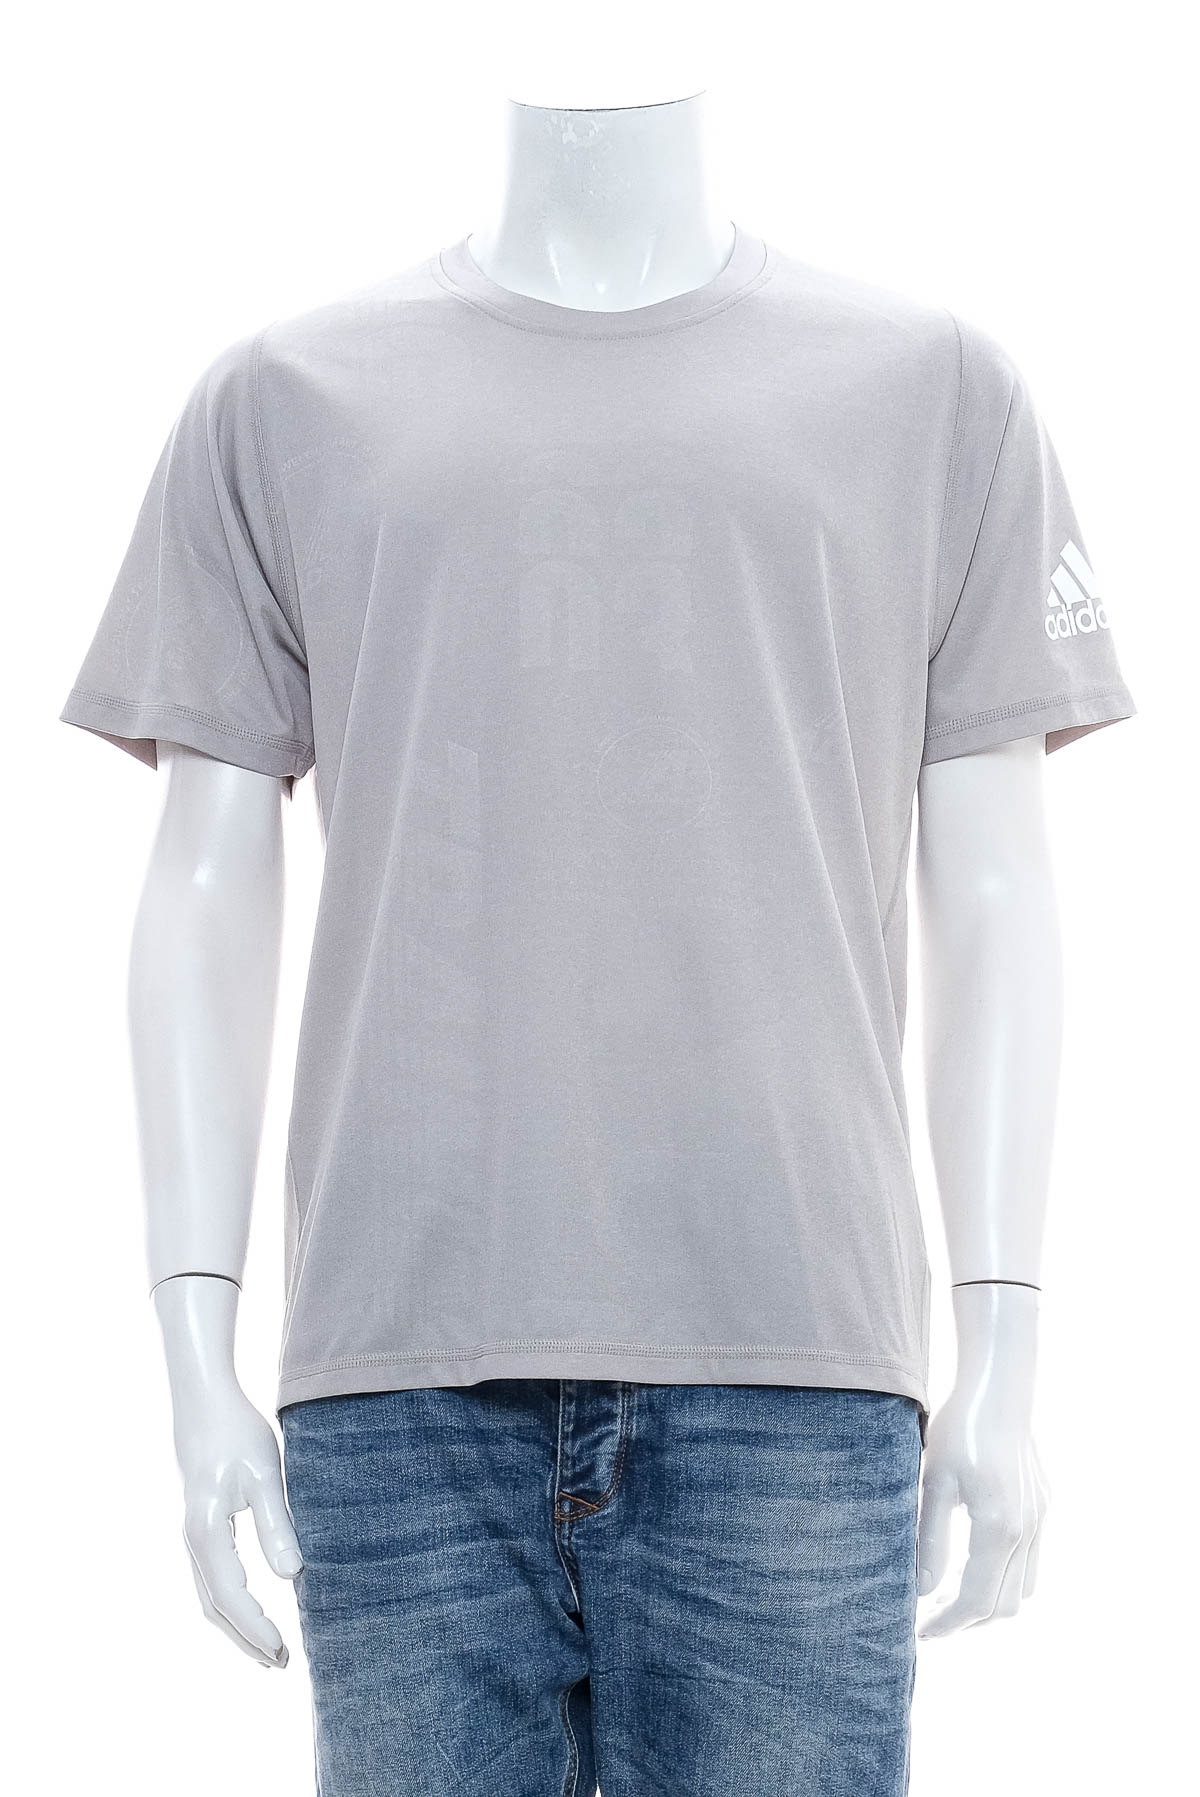 Men's T-shirt - Adidas - 0